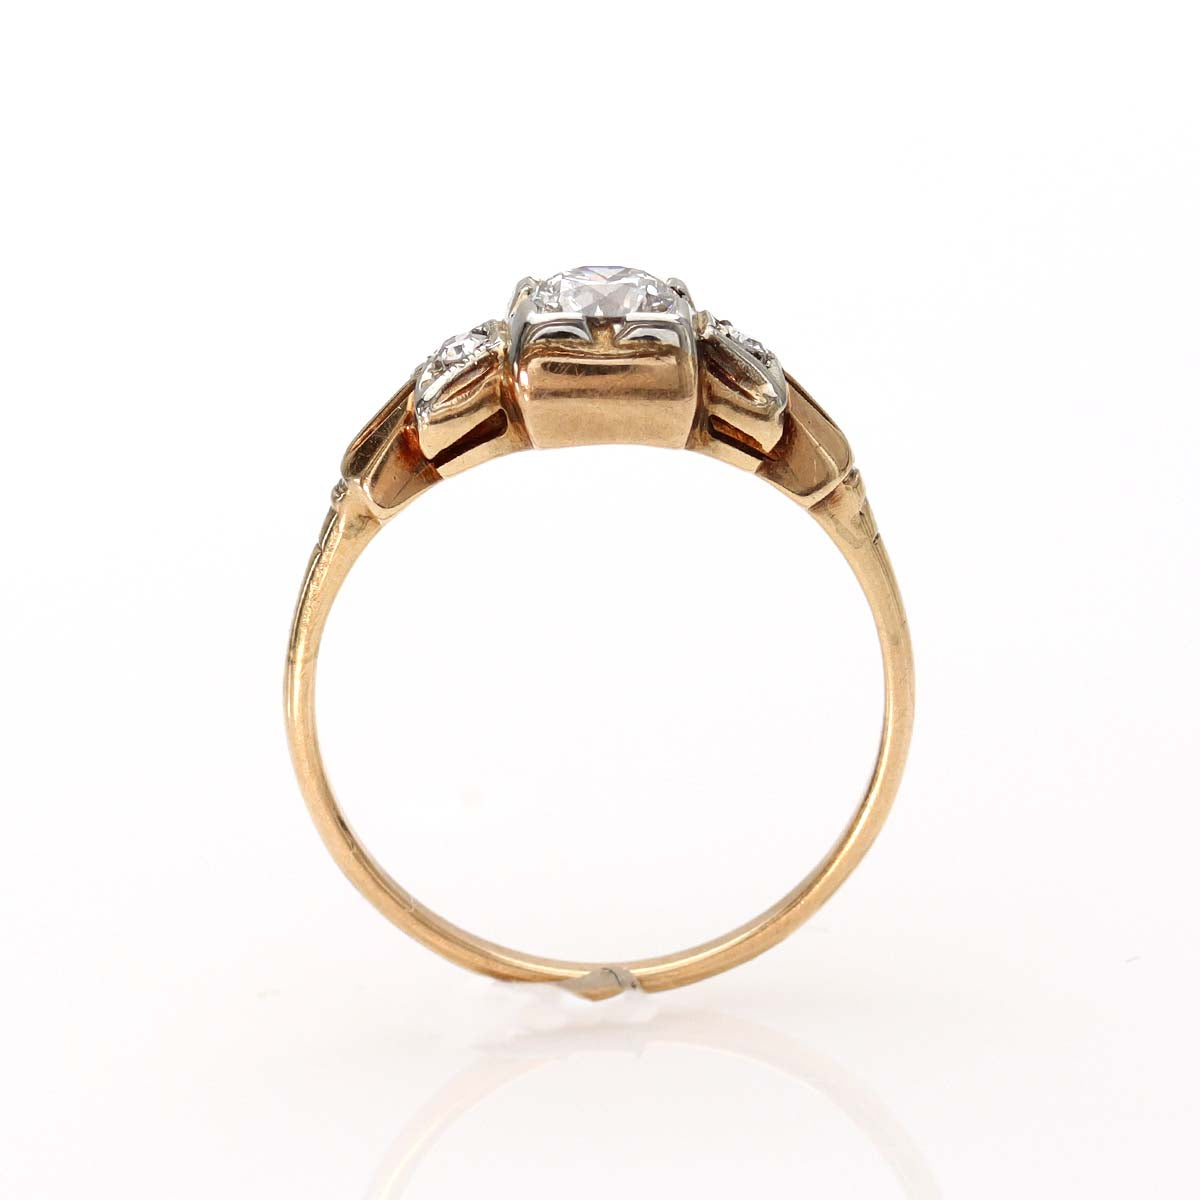 Circa 1940s Engagement Ring #VR160311-06